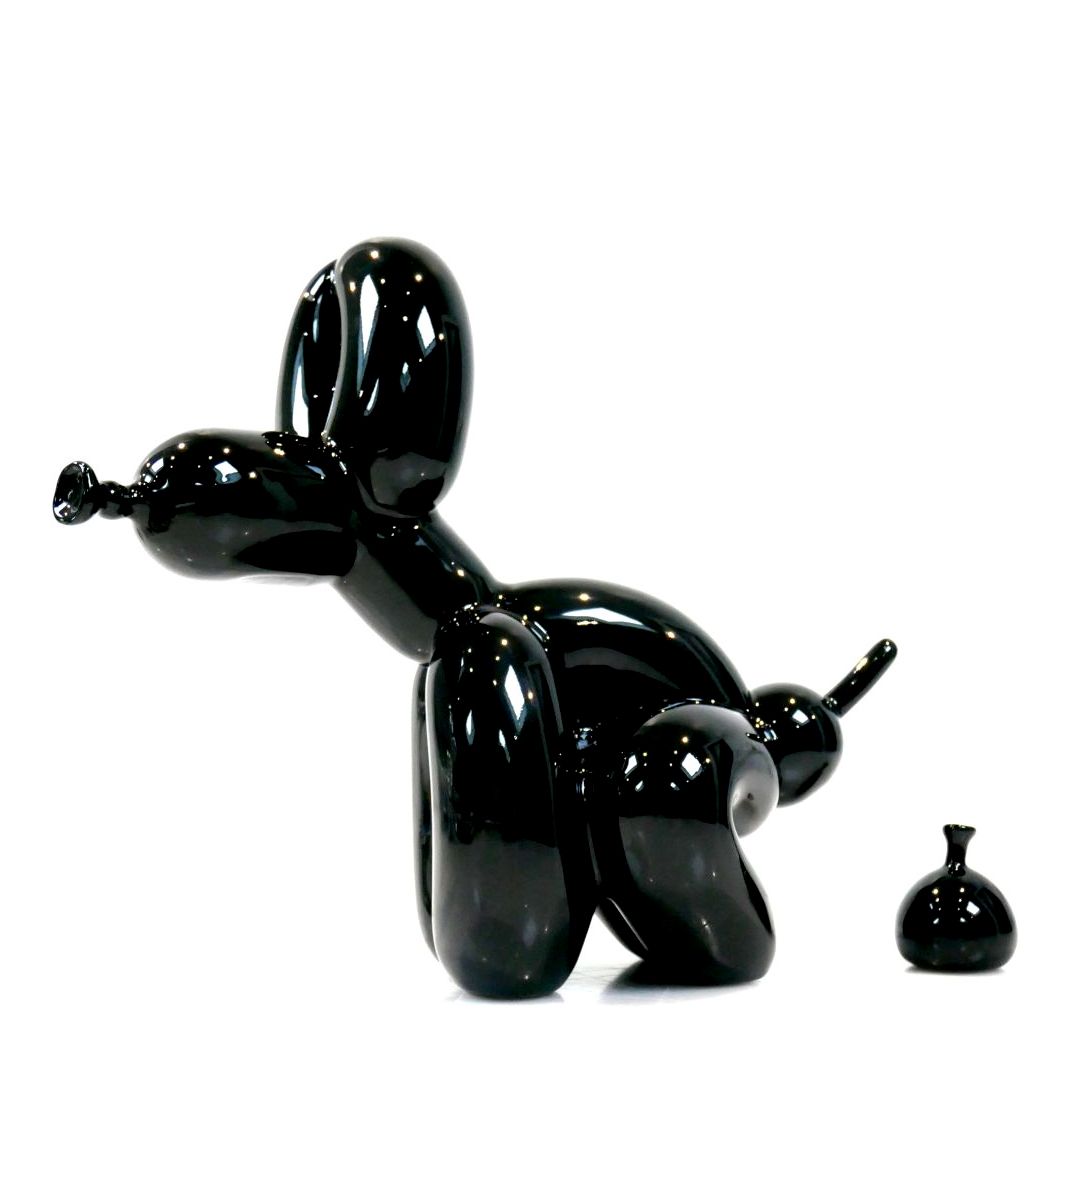 Escultura Popek Black Porcelana Edition por WhatshisName